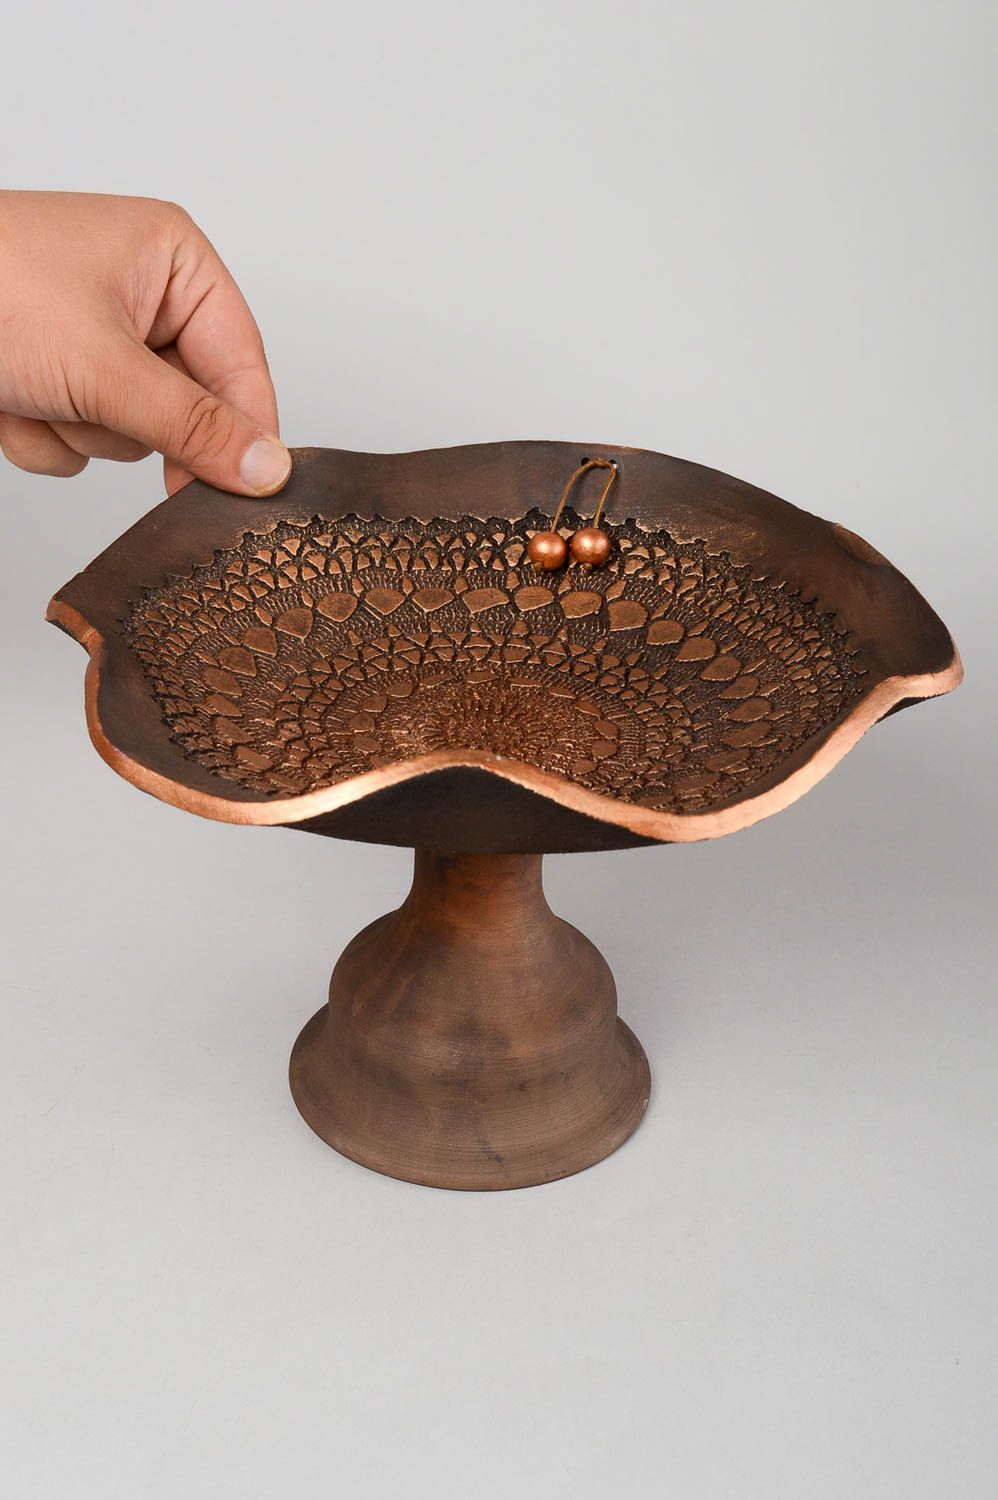 Unusual handmade ceramic fruit bowl tableware ideas pottery works gift ideas photo 5